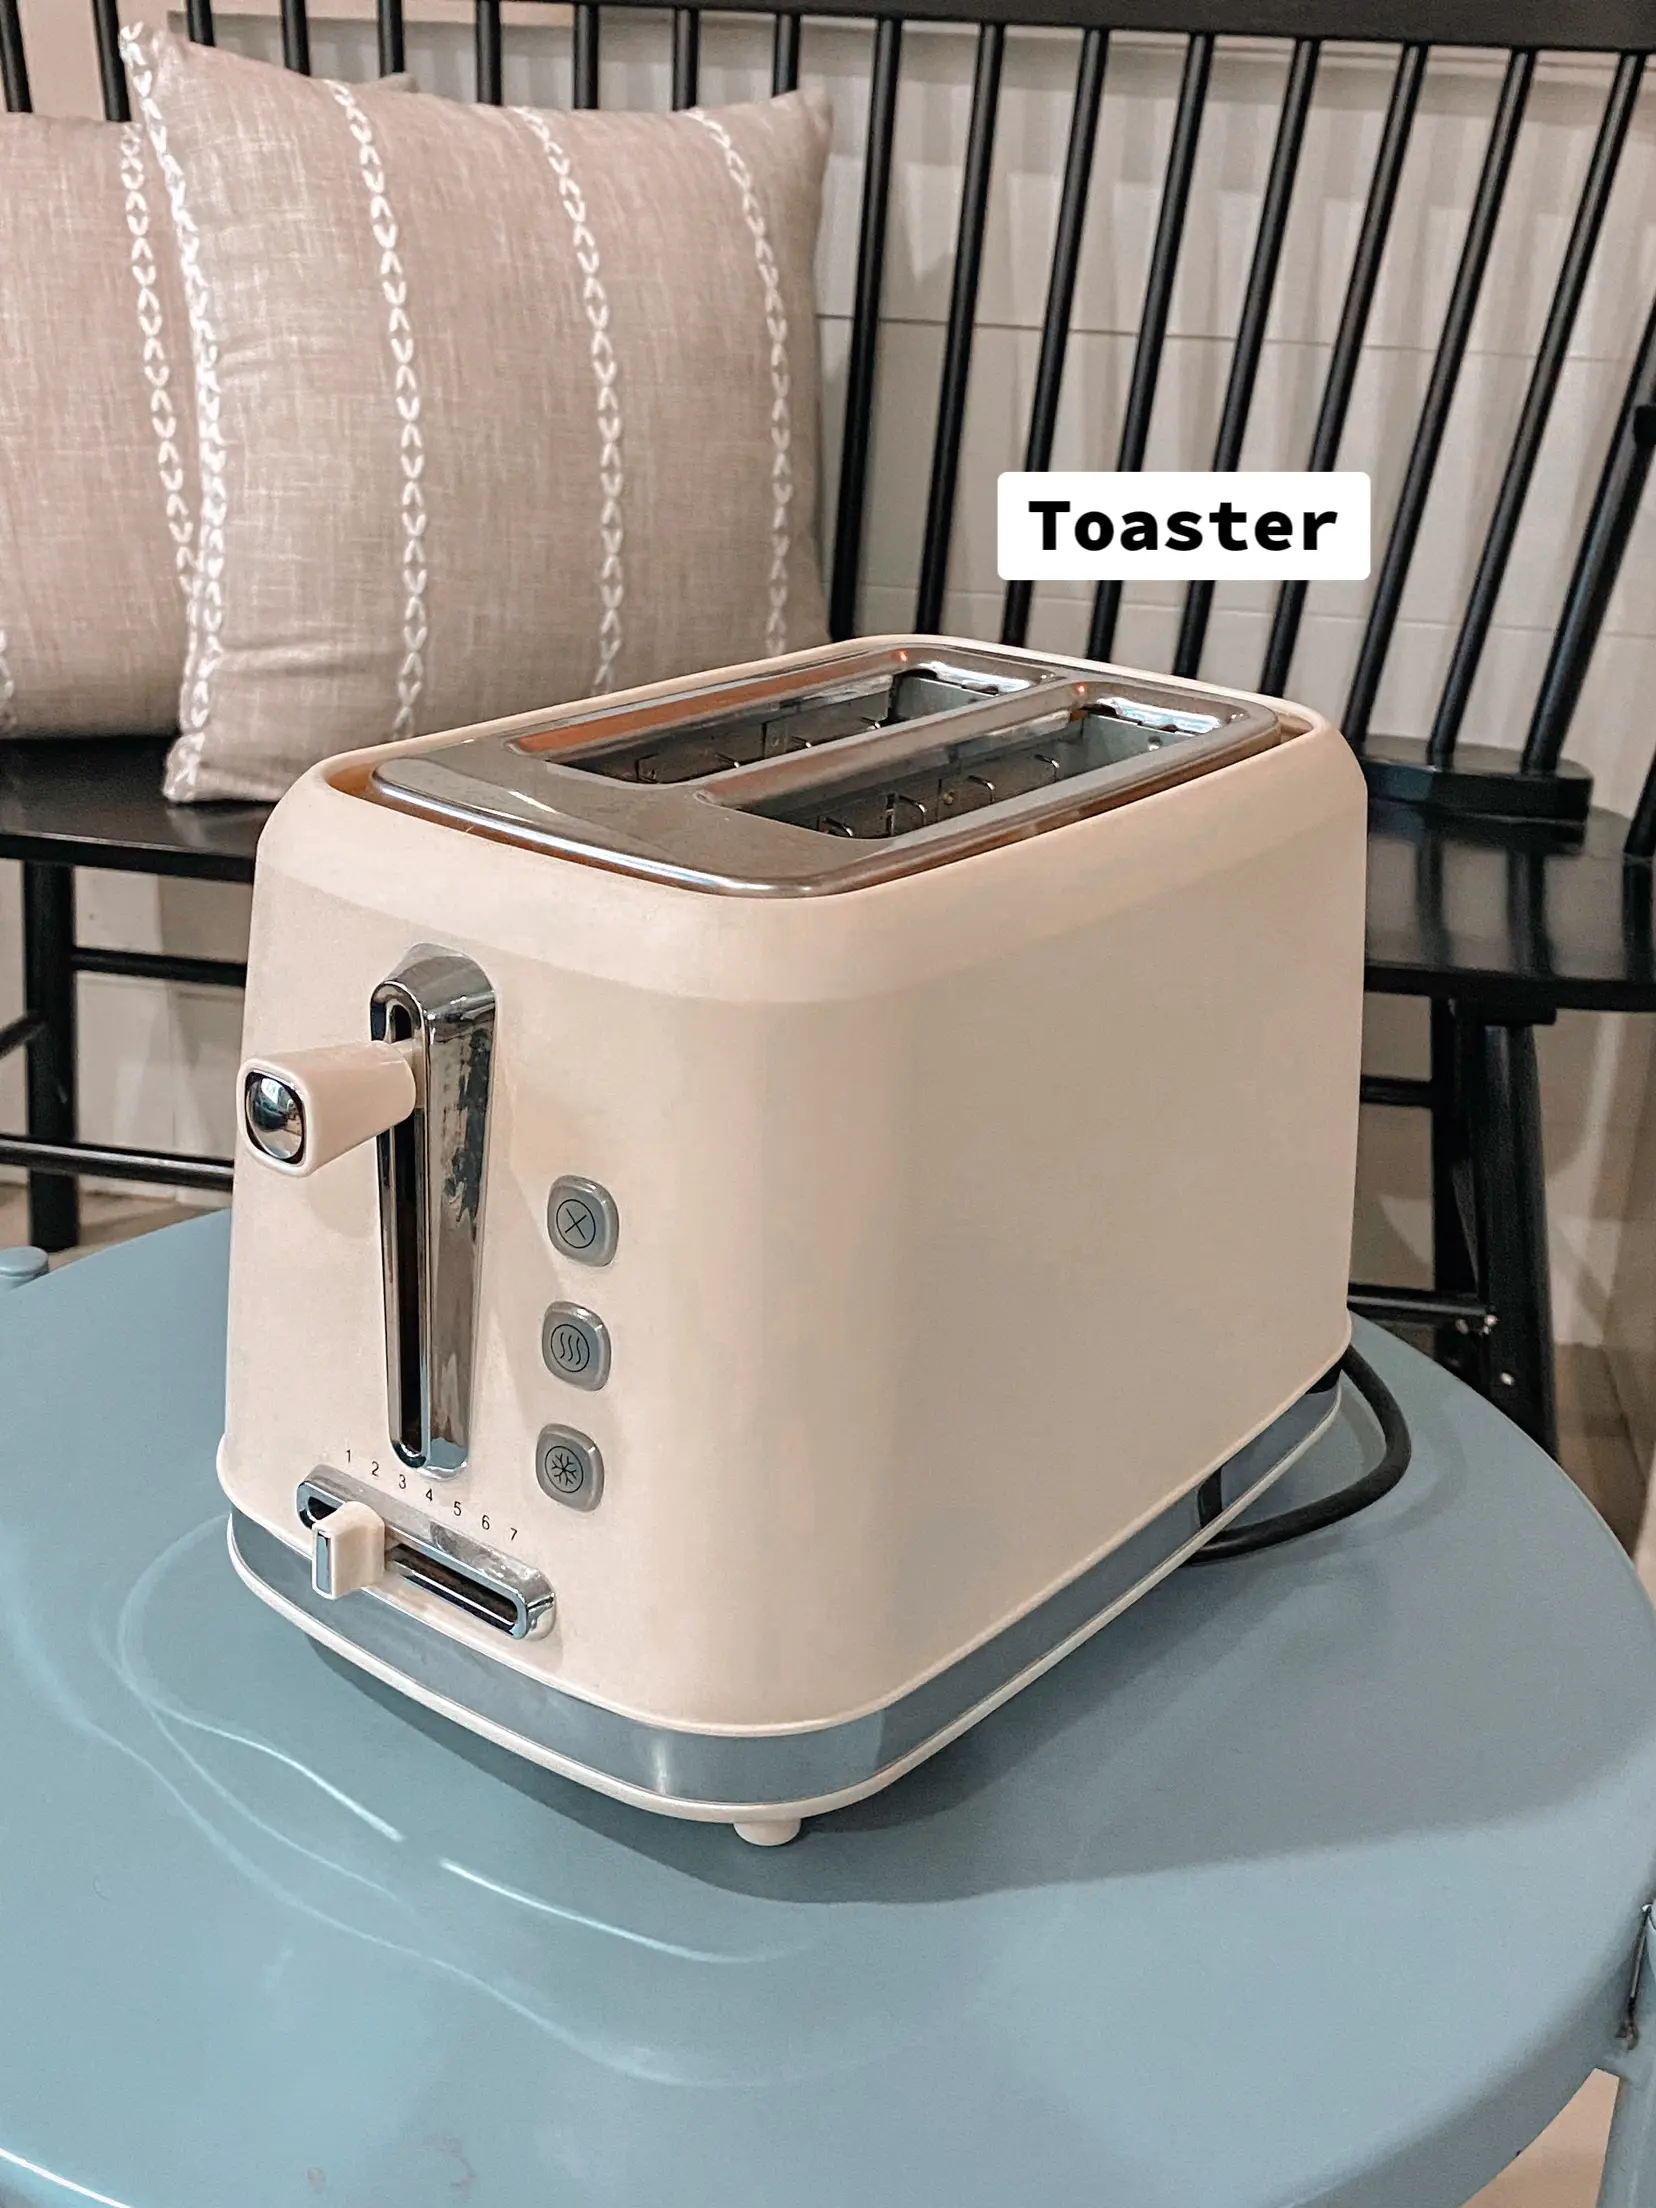 Smeg 2 Slice Toaster & 1.7L Kettle Breakfast Pack - Red – Bawas